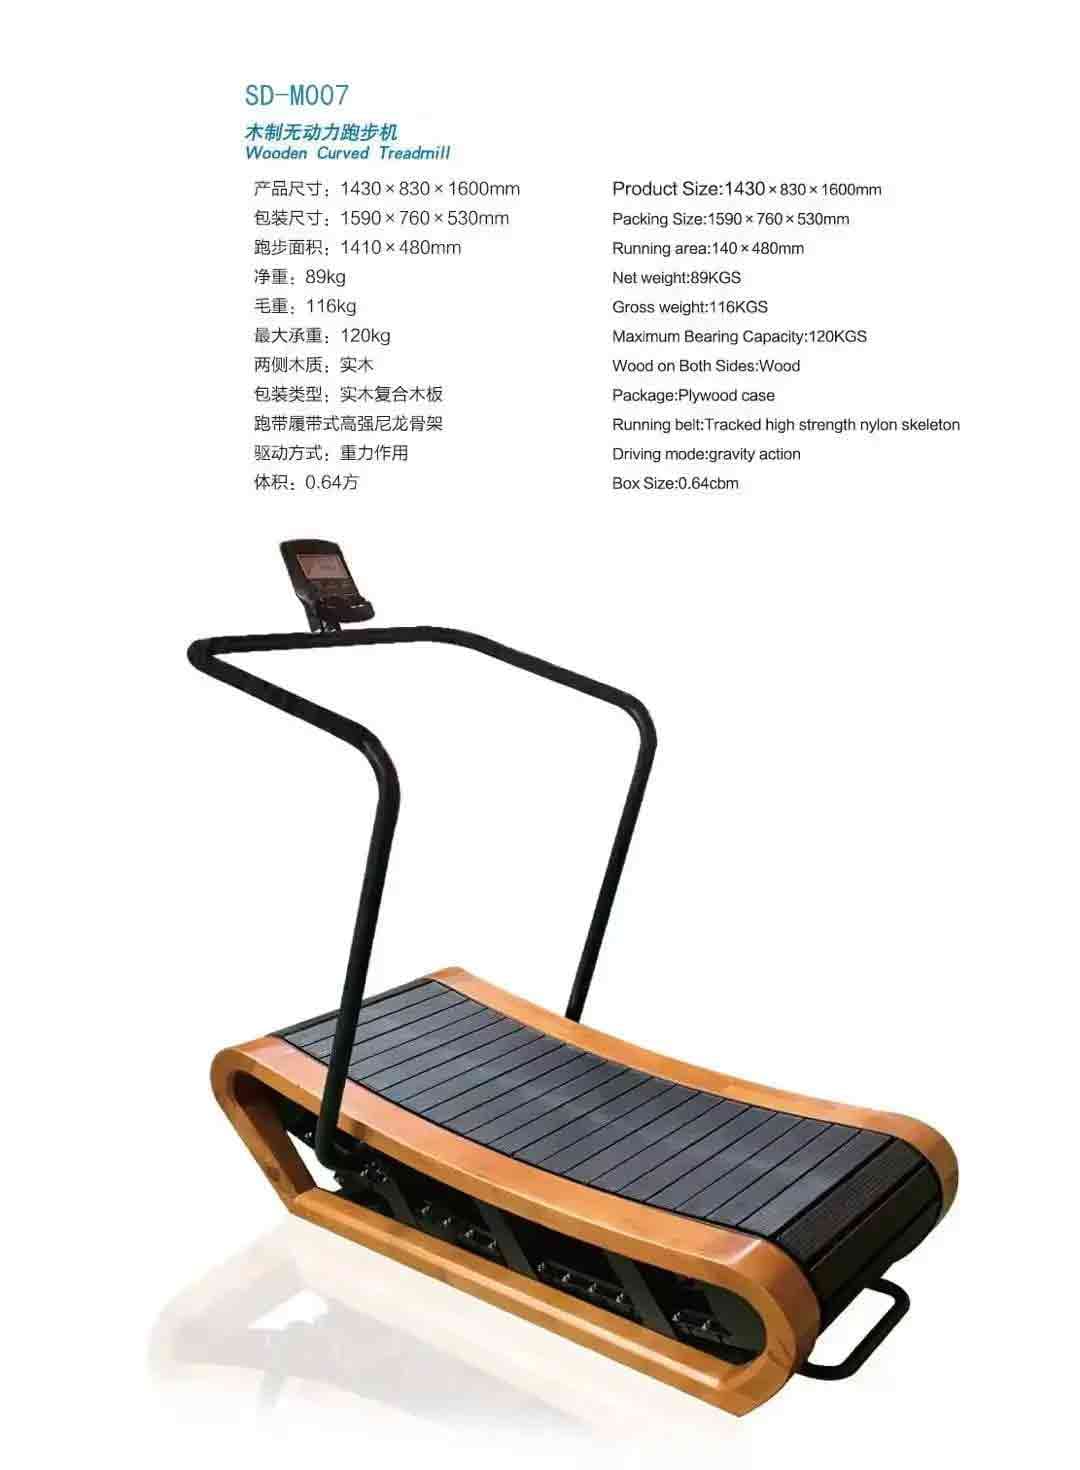 curved treadmill - SD-M007 - detalle 3